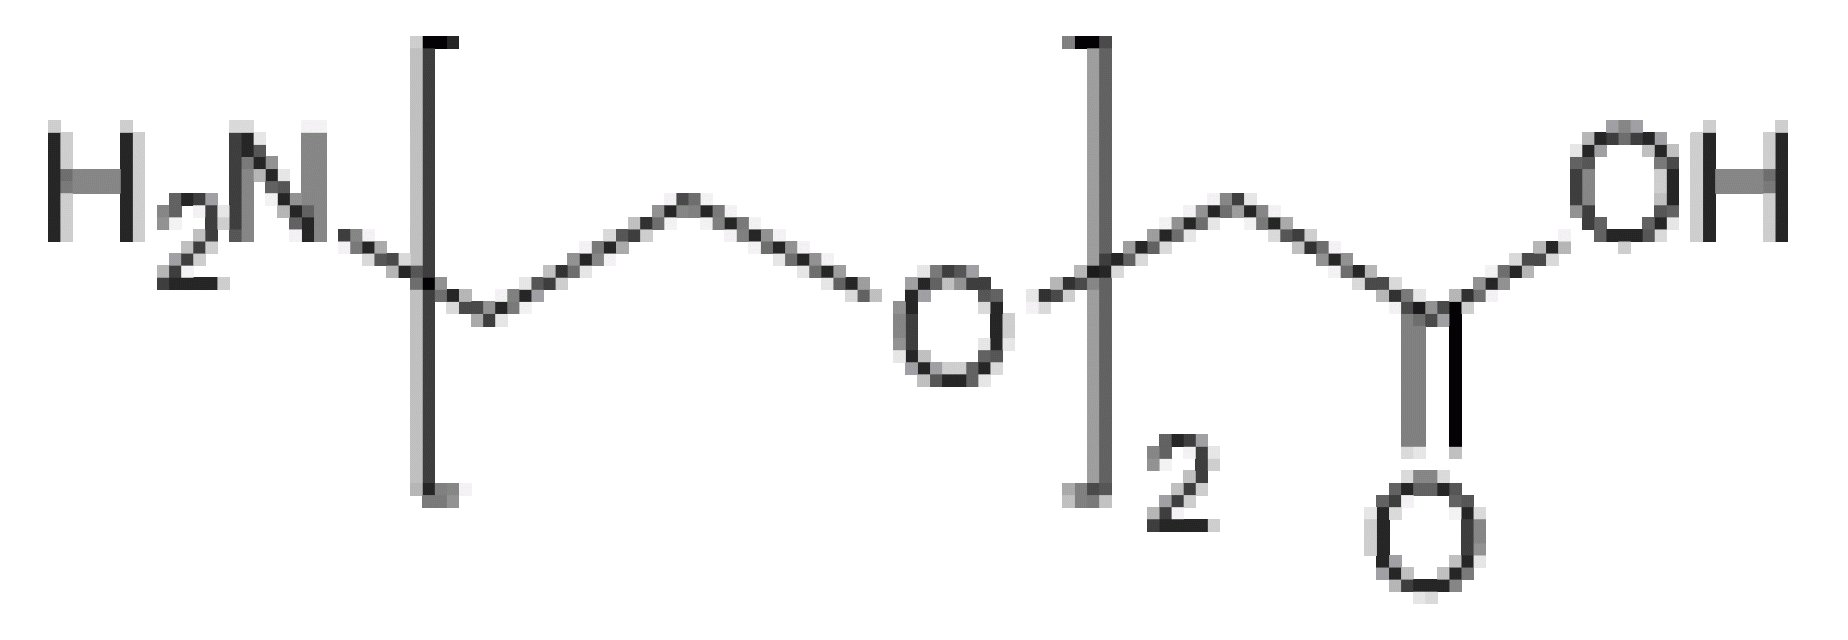 Nh2ch2ch2cooh. Ch3cooh графическая формула. Производные тиофена фармхимия. Nh2-Ch-Cooh.